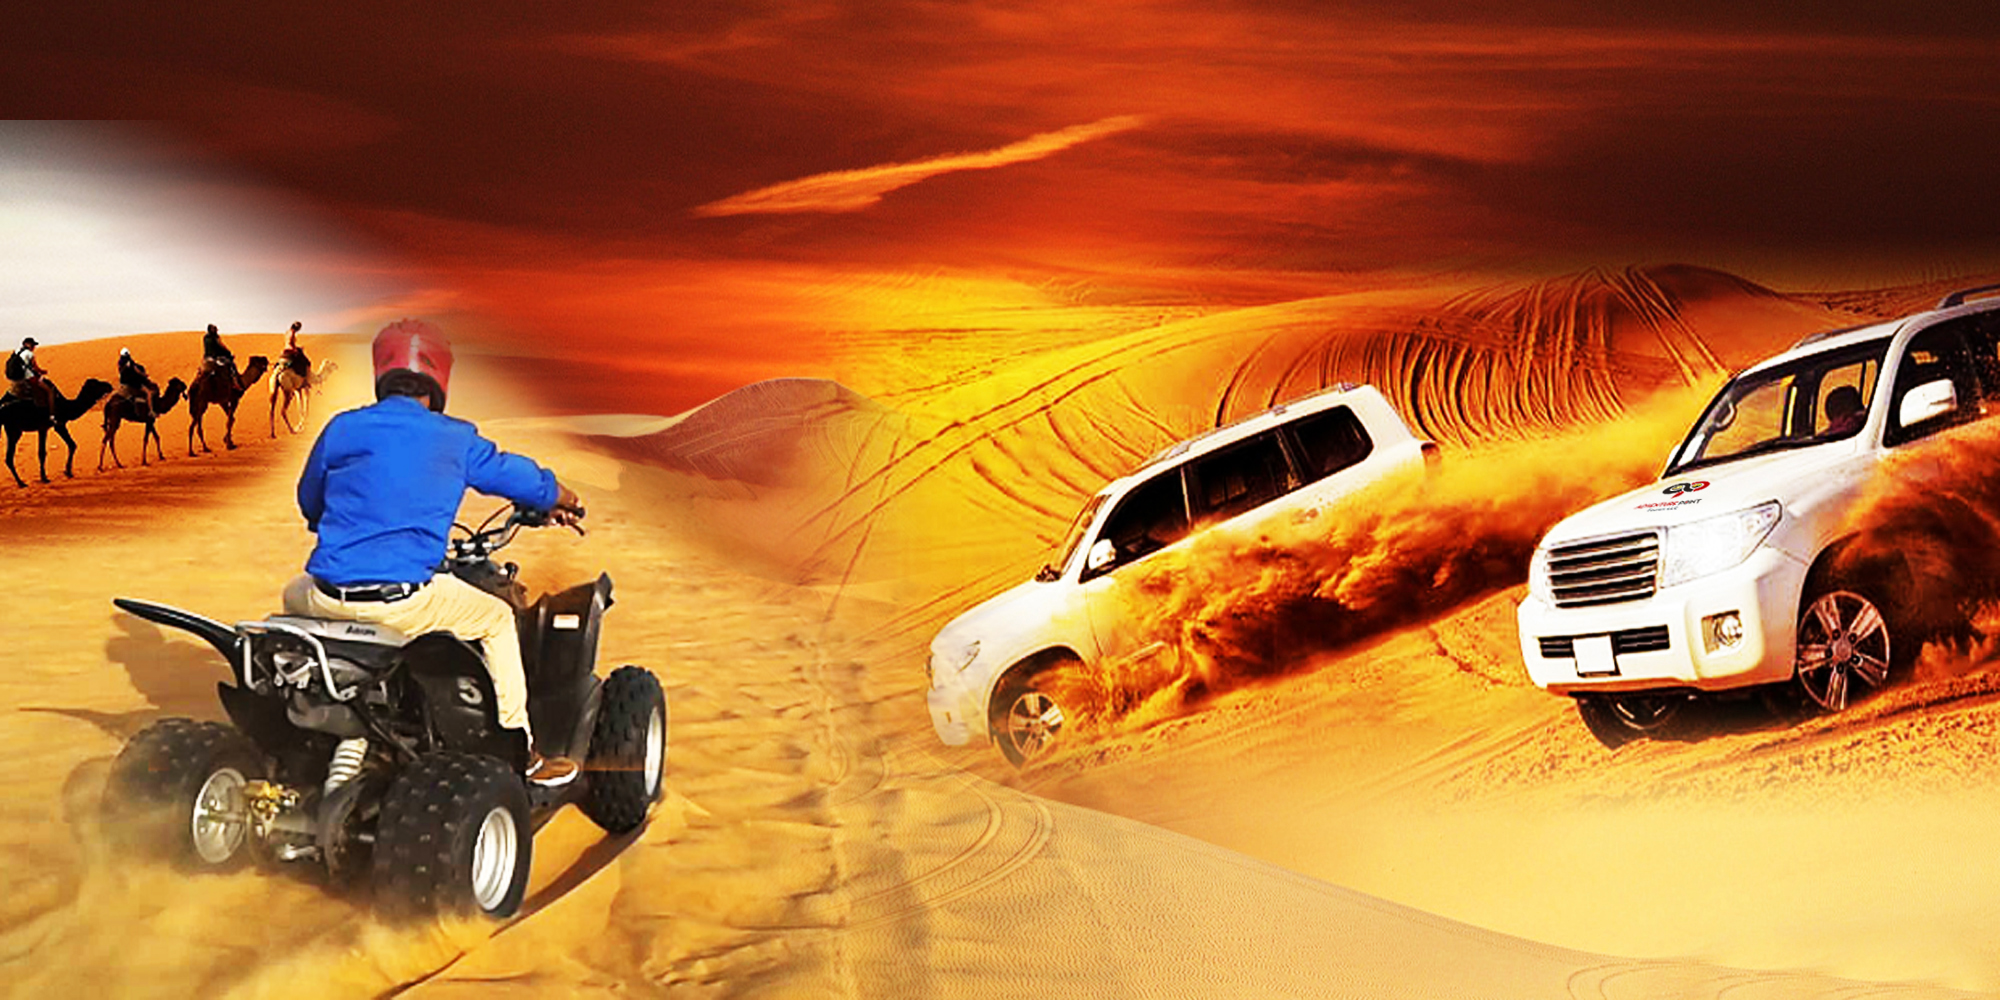 Desert Safari with Quad Bike Ride